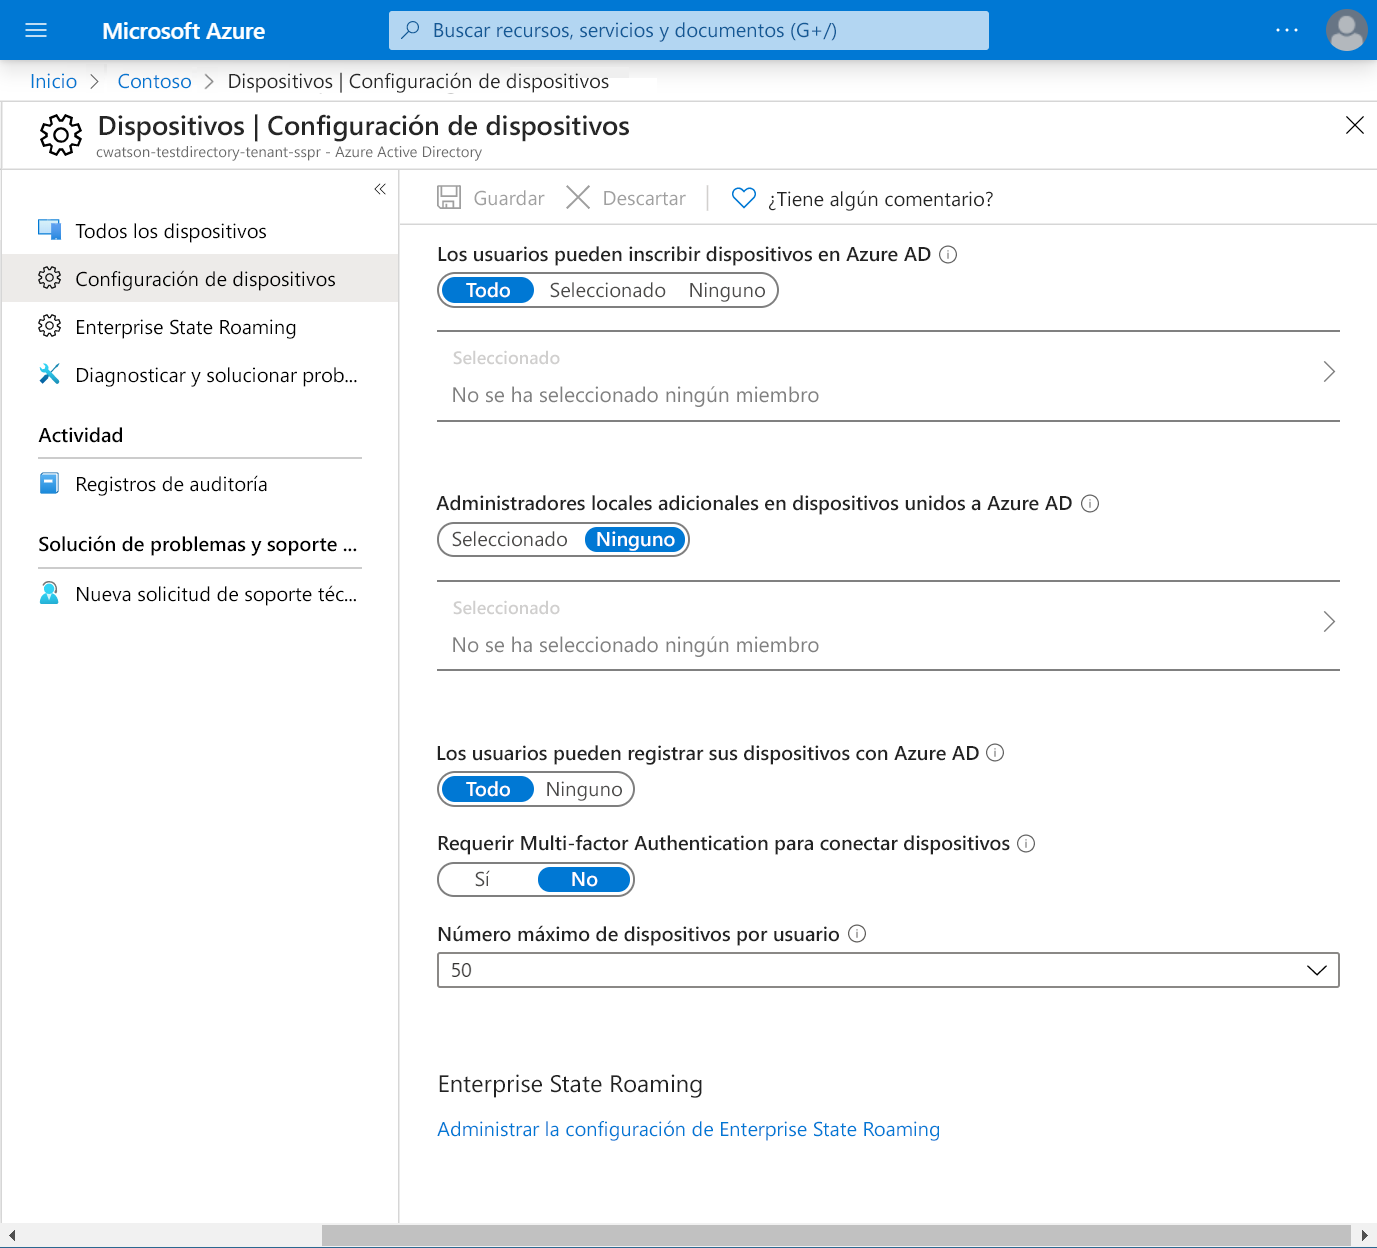 Screenshot of the Microsoft Entra device settings.